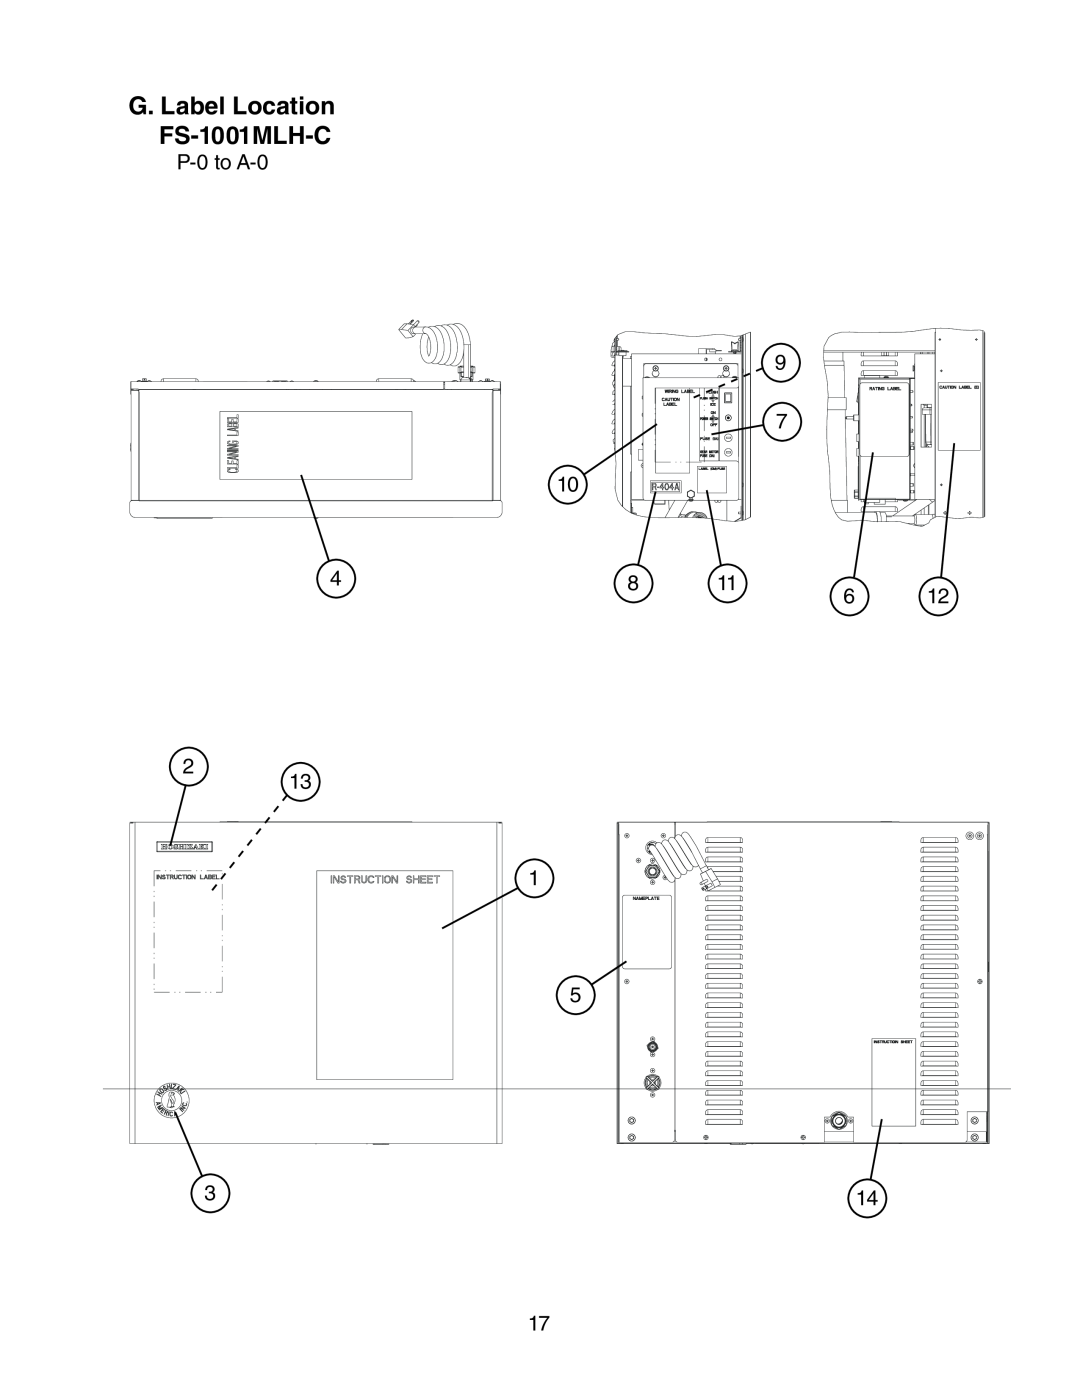 Hoshizaki manual G. Label Location FS-1001MLH-C, P-0to A-0 